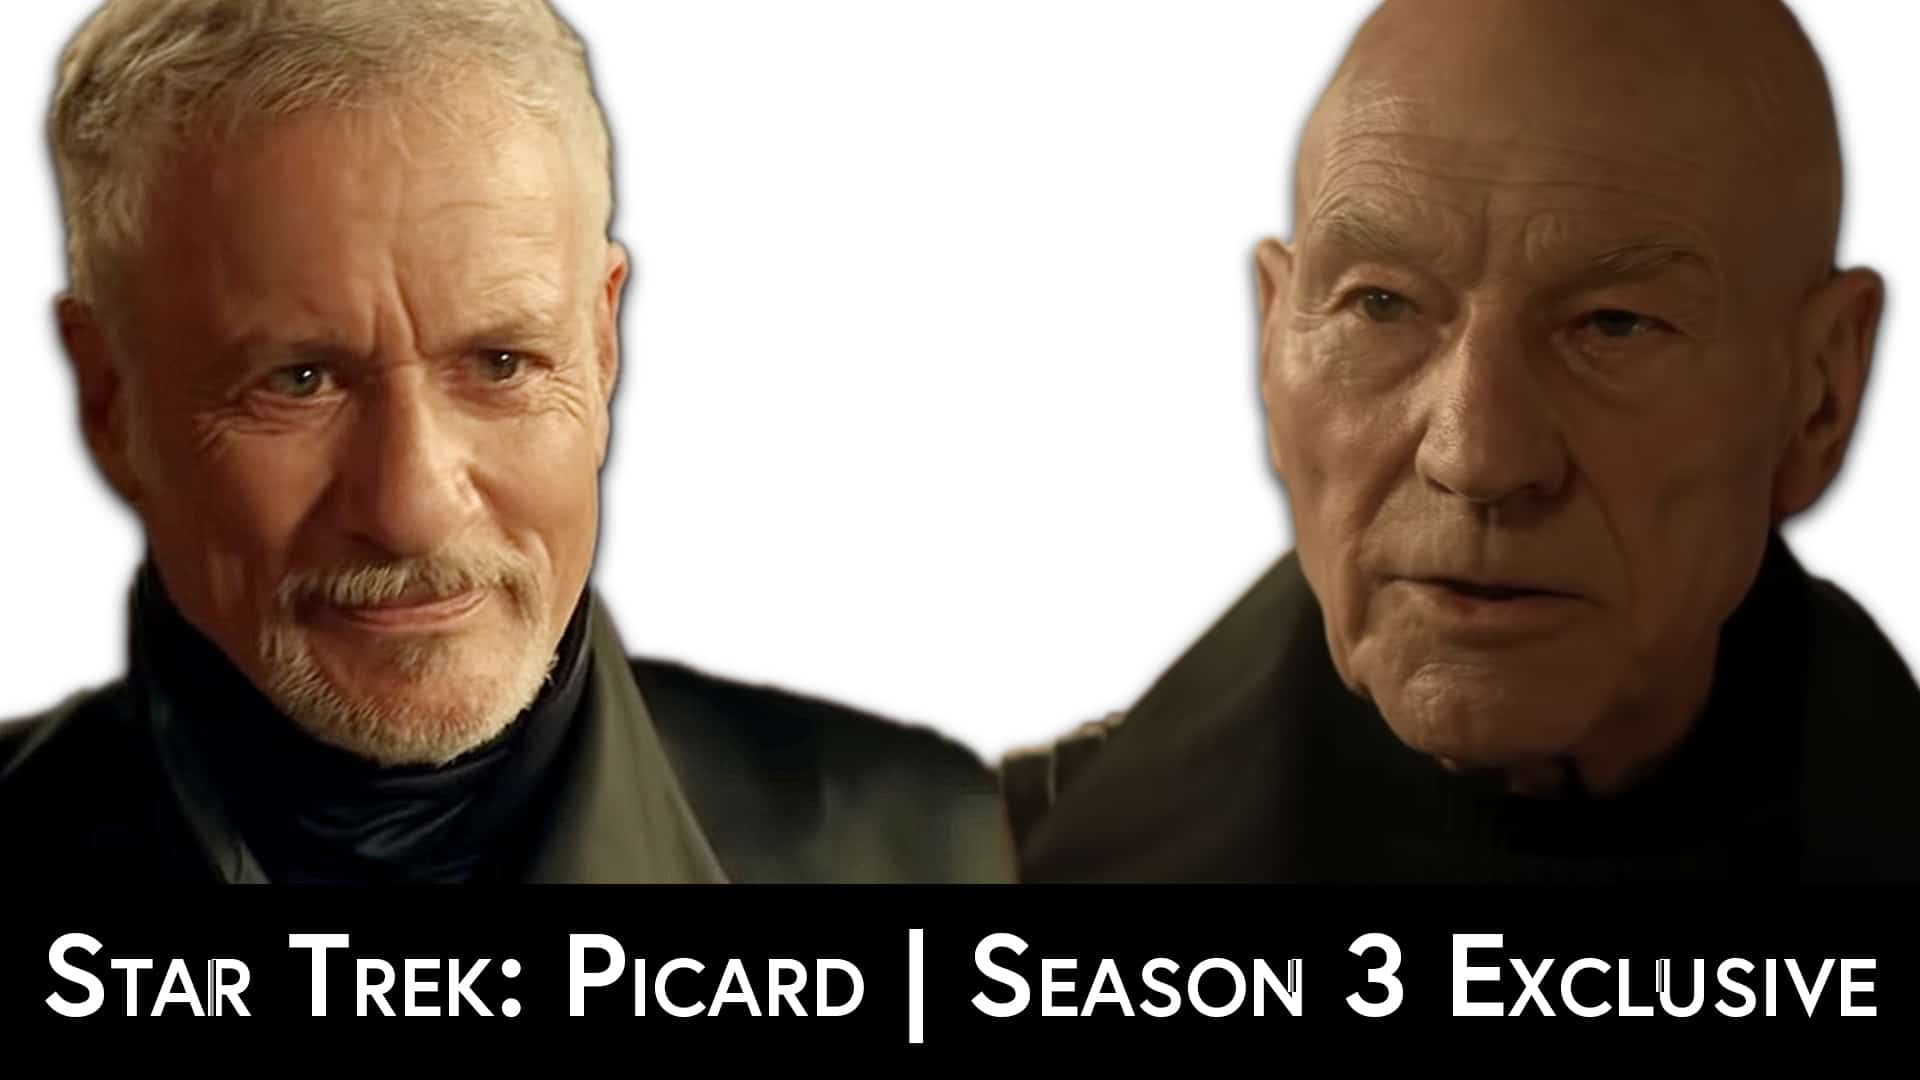 Picard Season 3 Exclusive